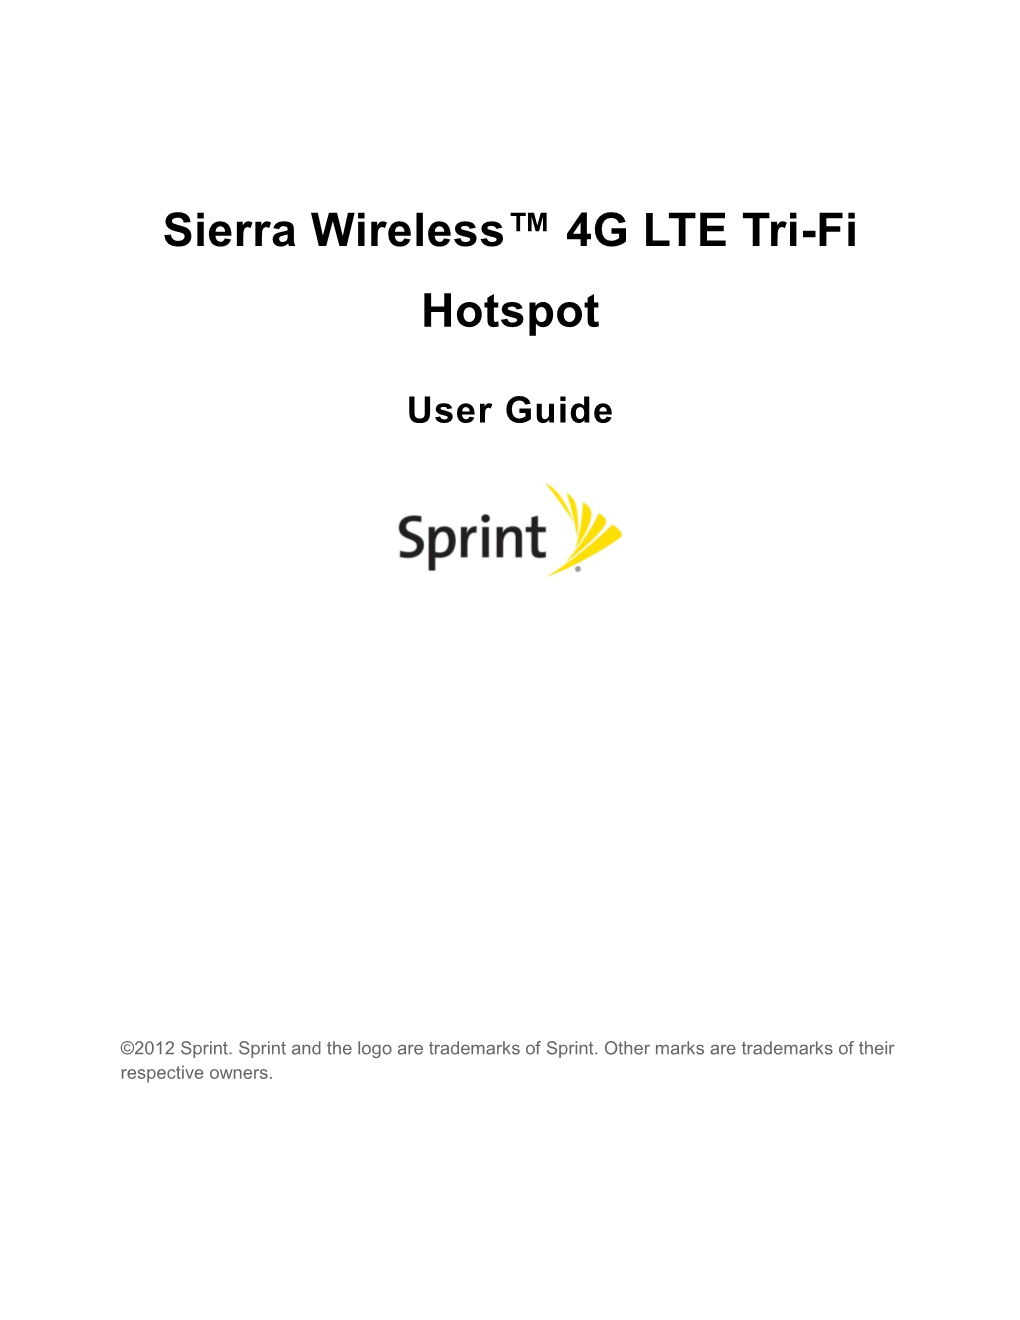 Sierra Wireless™ 4G LTE Tri-Fi Hotspot